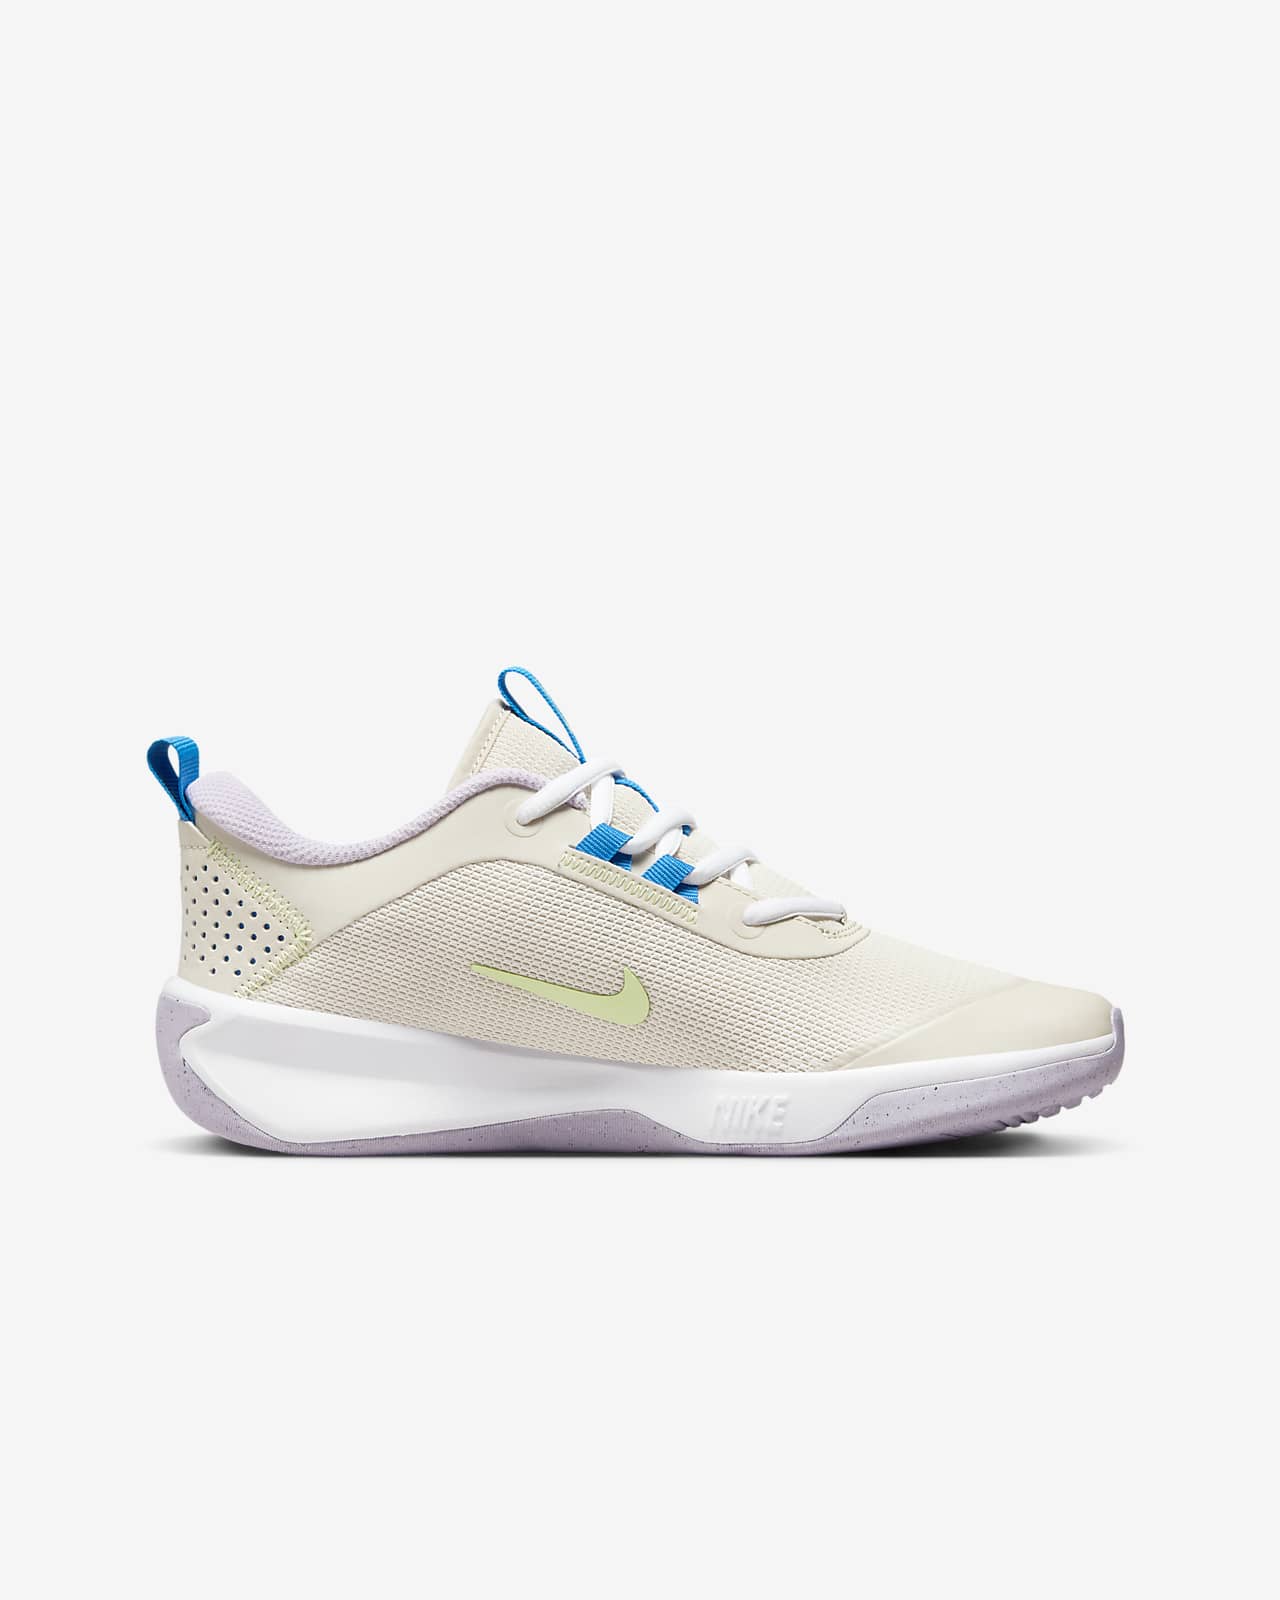 Older Omni Nike Court Nike Indoor Shoes. Kids\' CA Multi-Court